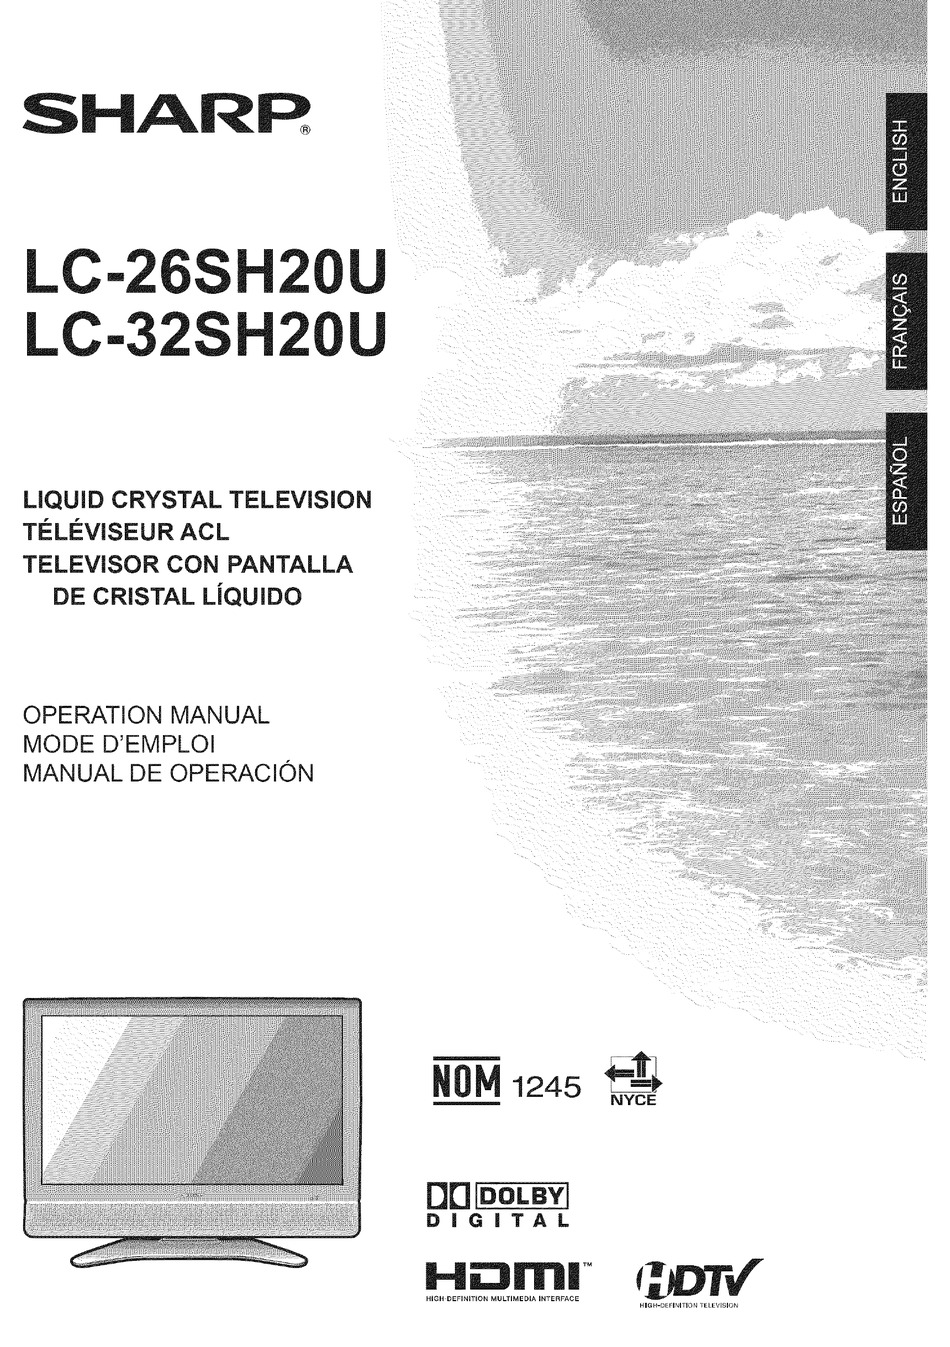 SHARP LC 32SH20U - 32